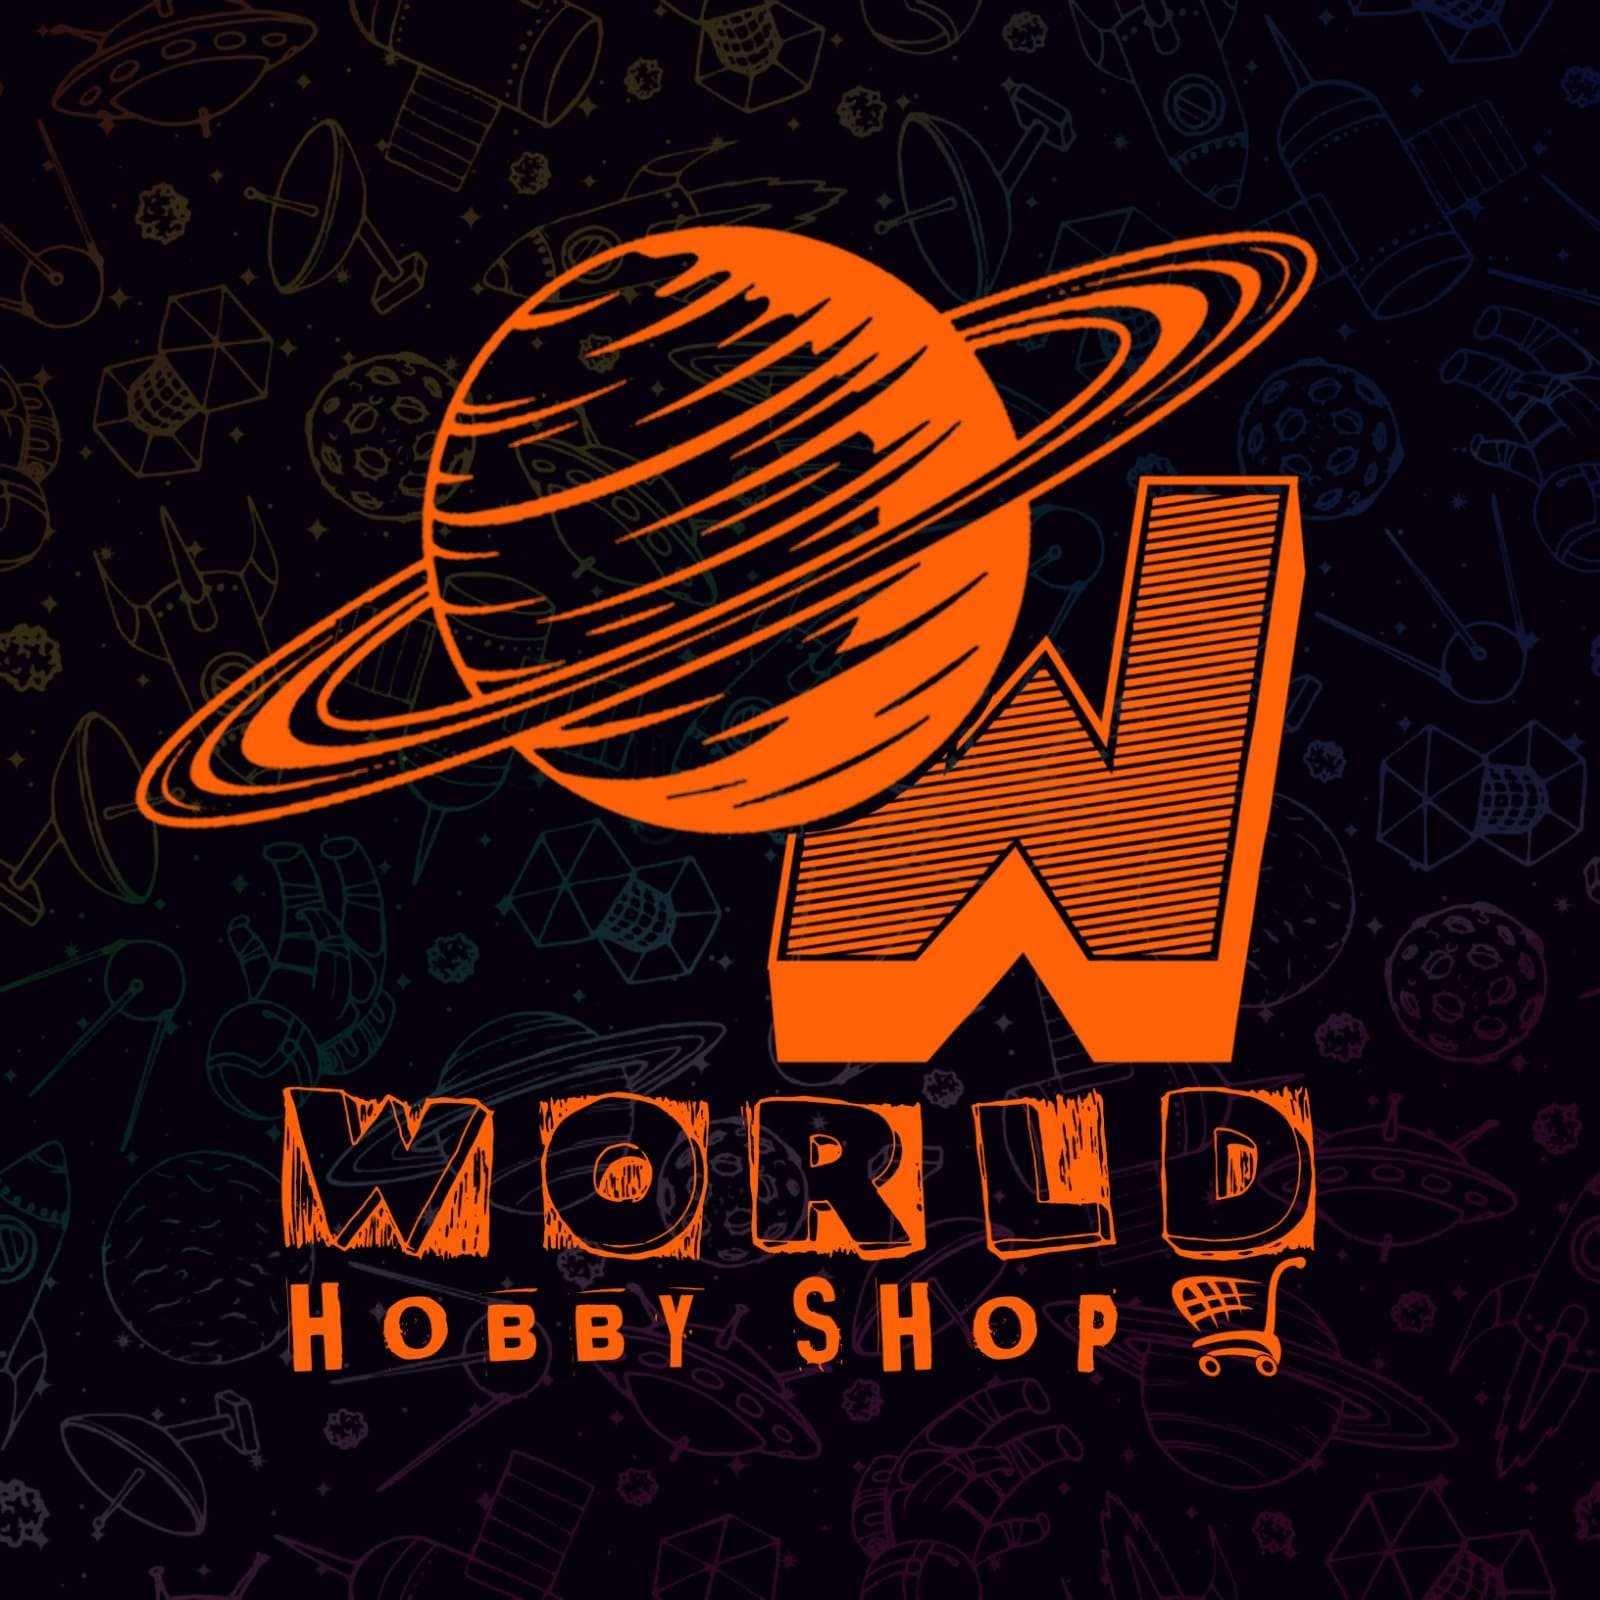 World Hobby Shop 